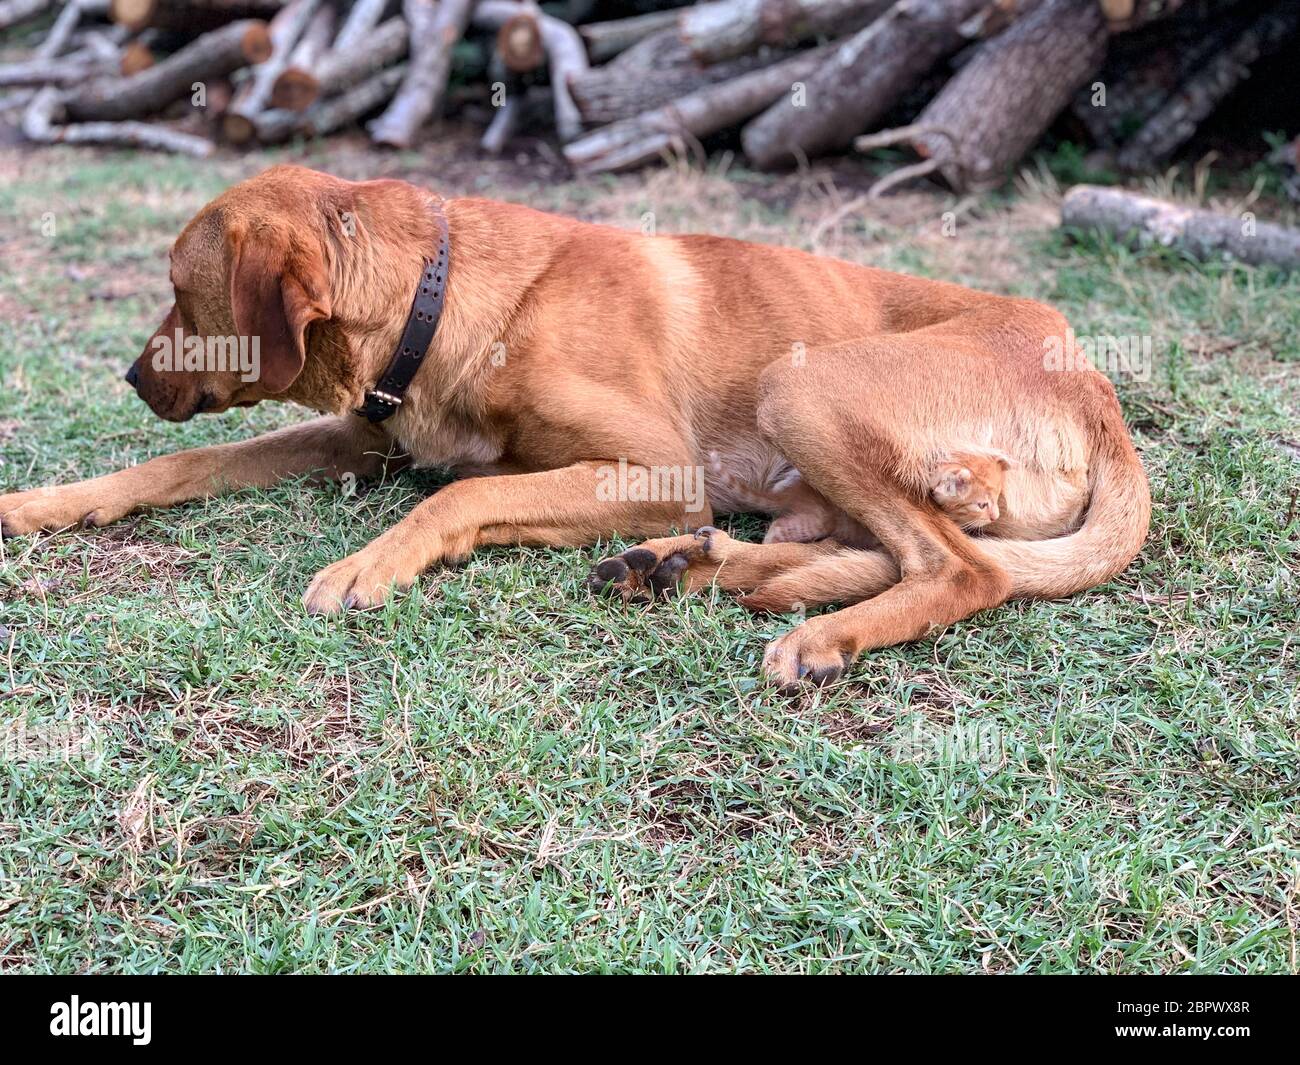 1 April Fool's Day. Lustig Hund mit Witz Aufkleber auf dem Rücken  Stockfotografie - Alamy